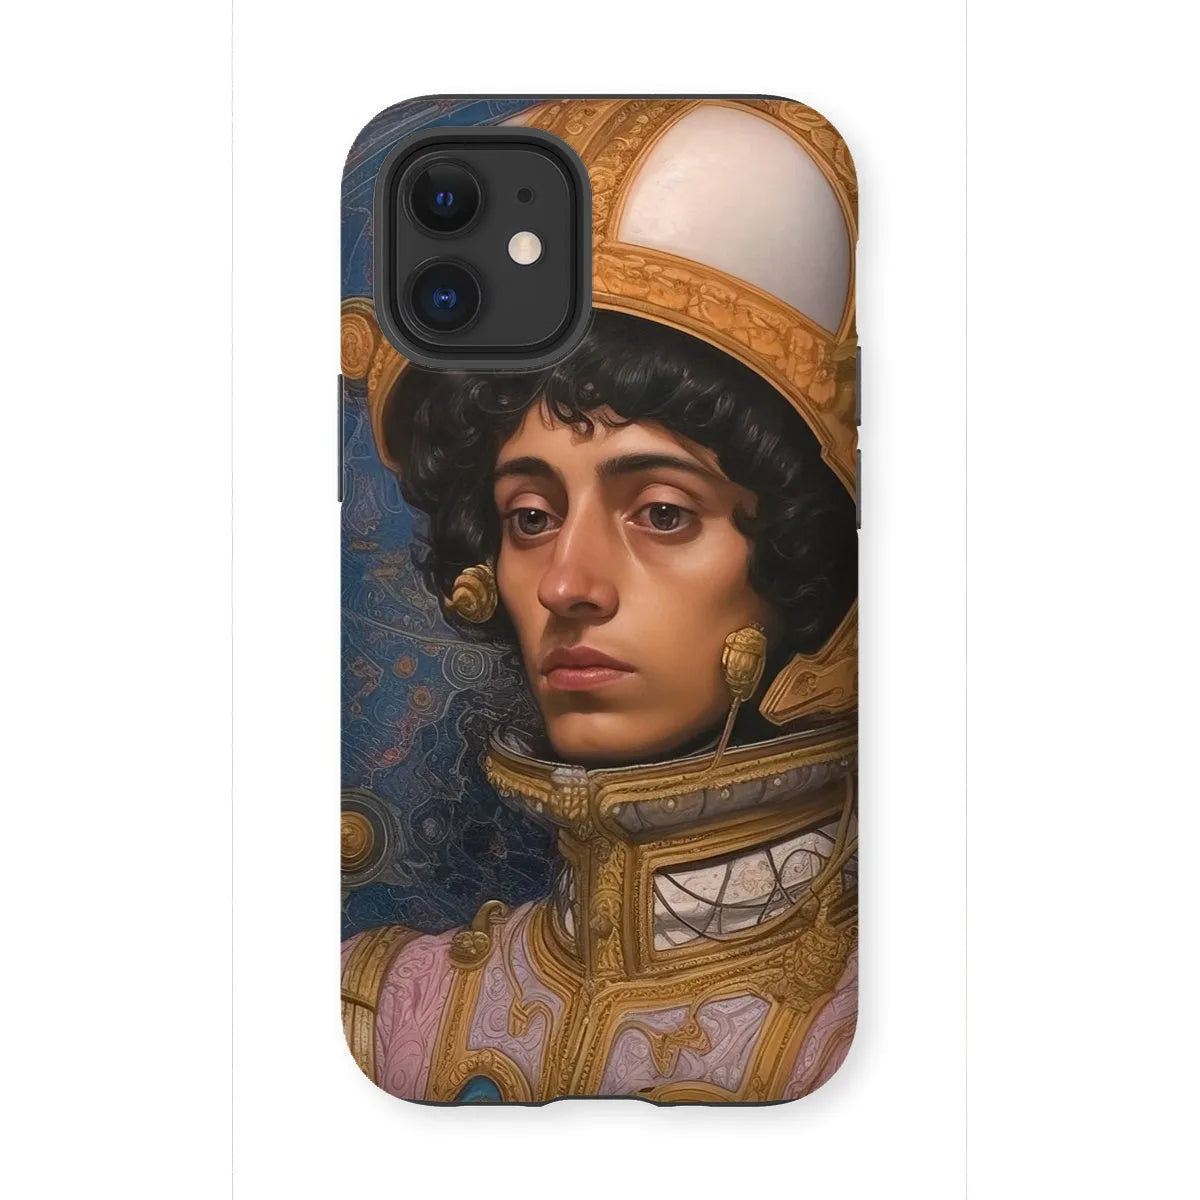 Samir The Gay Astronaut - Lgbtq Art Phone Case - Iphone 12 Mini / Matte - Mobile Phone Cases - Aesthetic Art